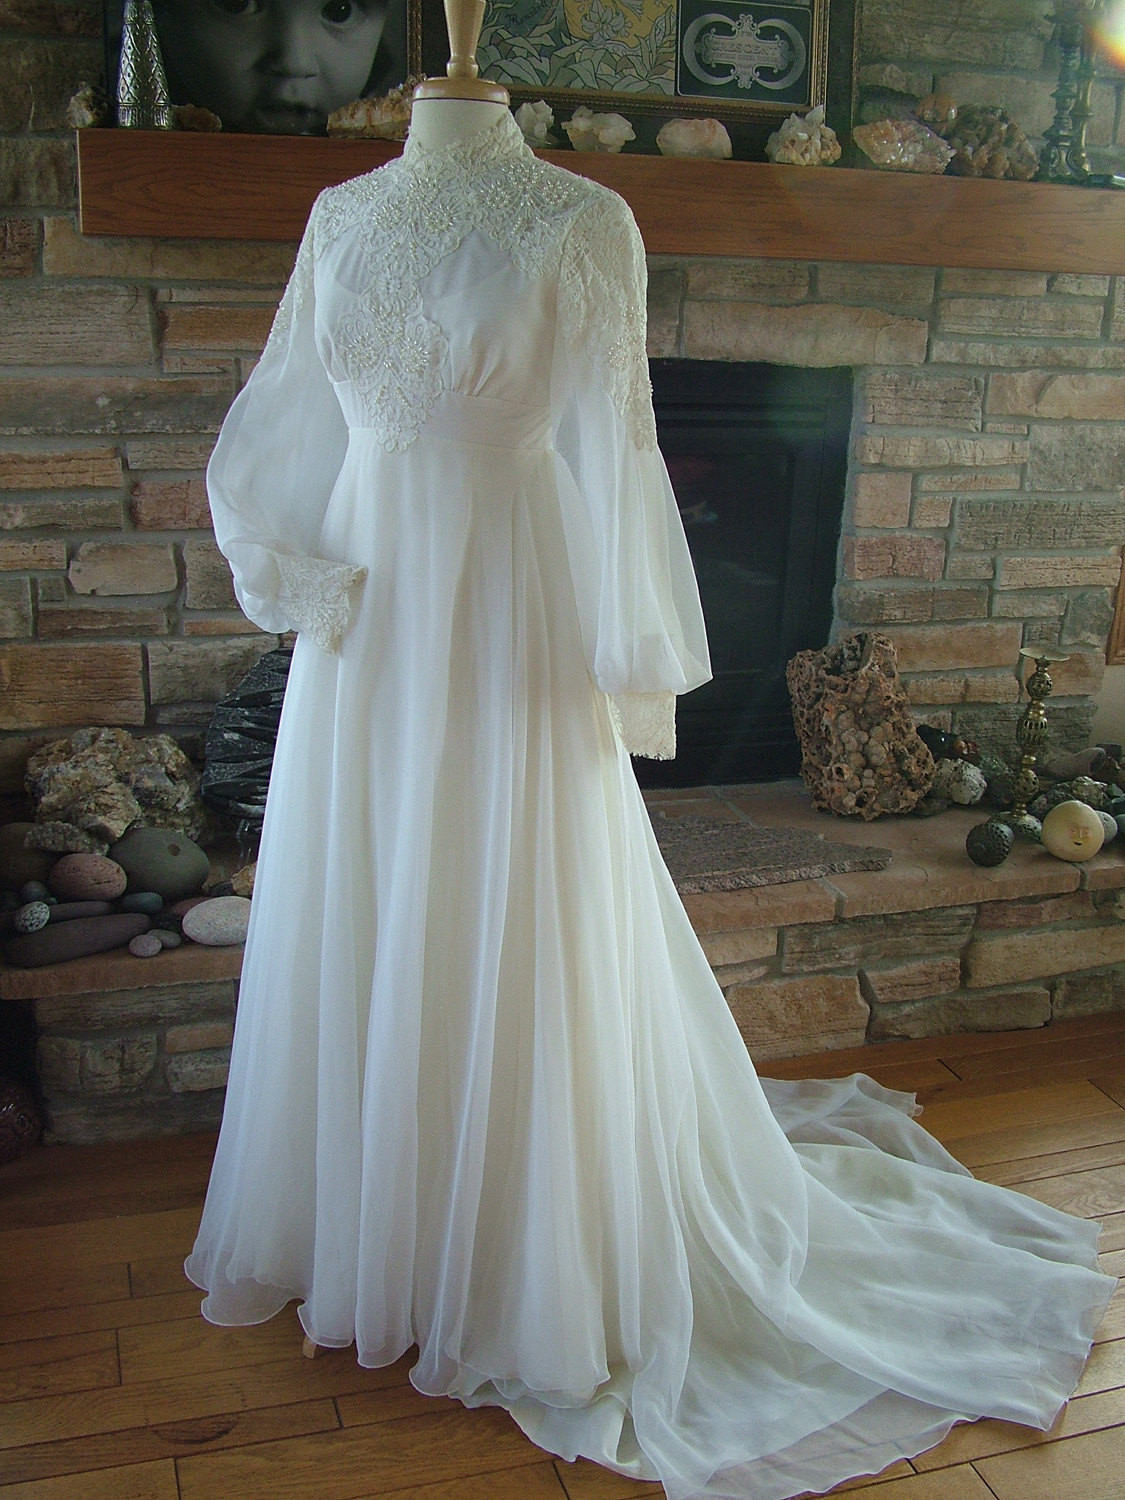 Retro Wedding Gowns
 Vintage wedding dress 1970s chiffon with alencon lace bodice